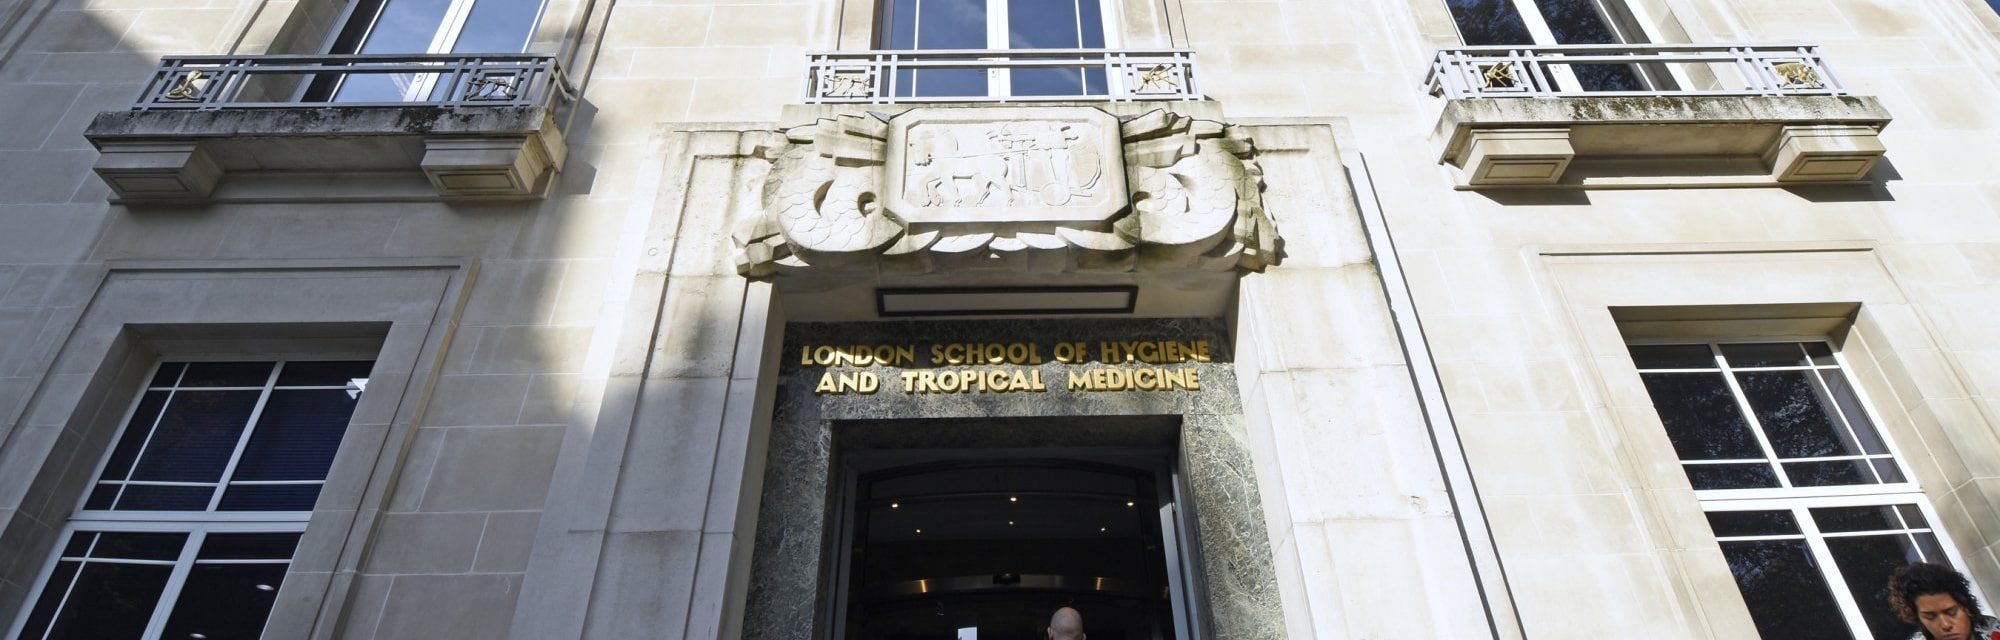 London School of Hygiene and Tropical Medicine Building.